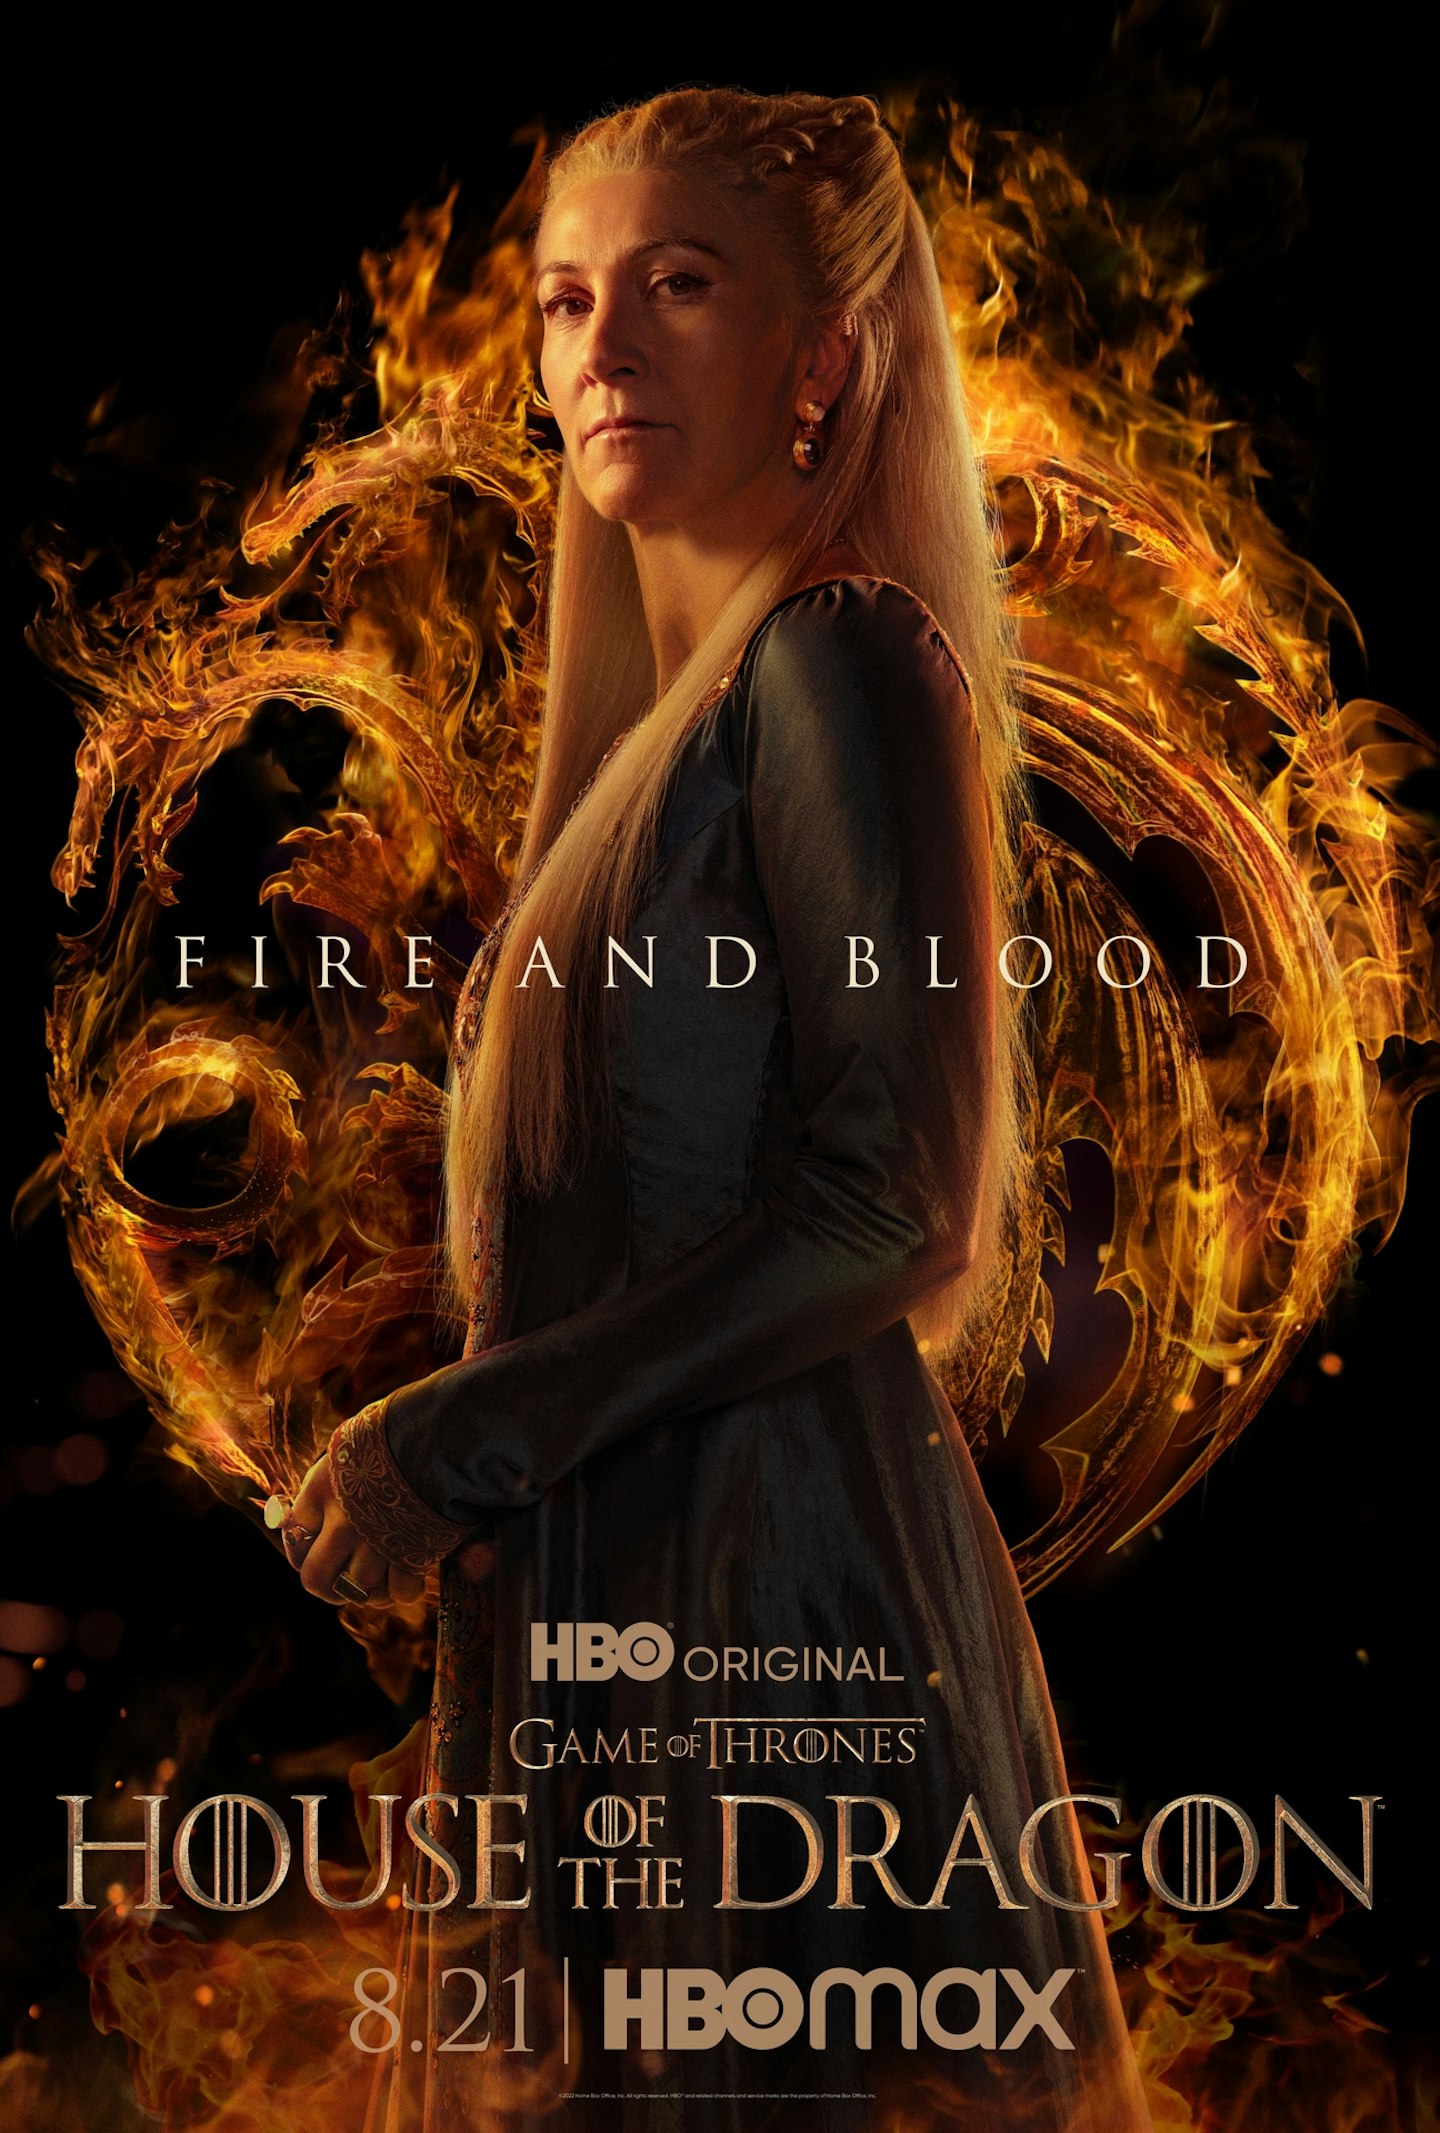 Eve Best as Princess Rhaenys Targaryen